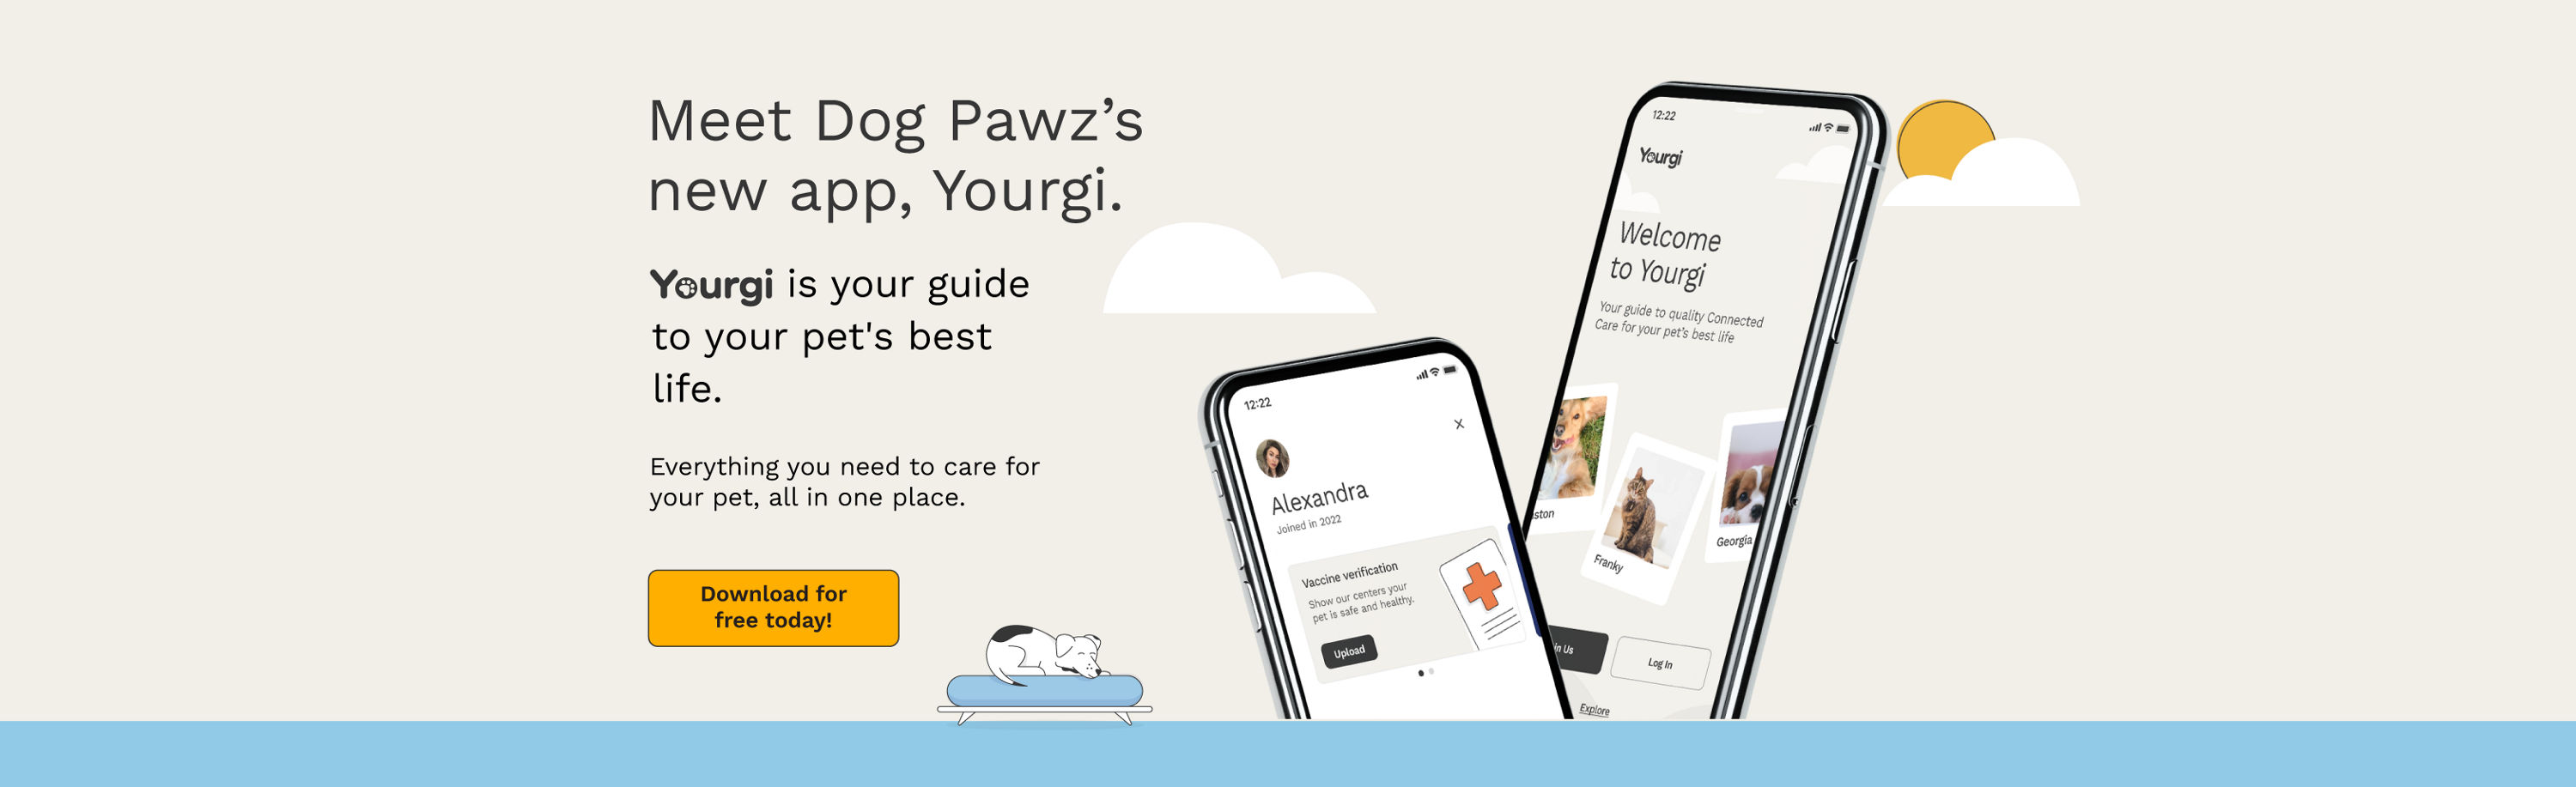 Meet Dog Pawz's new app, yourgi.